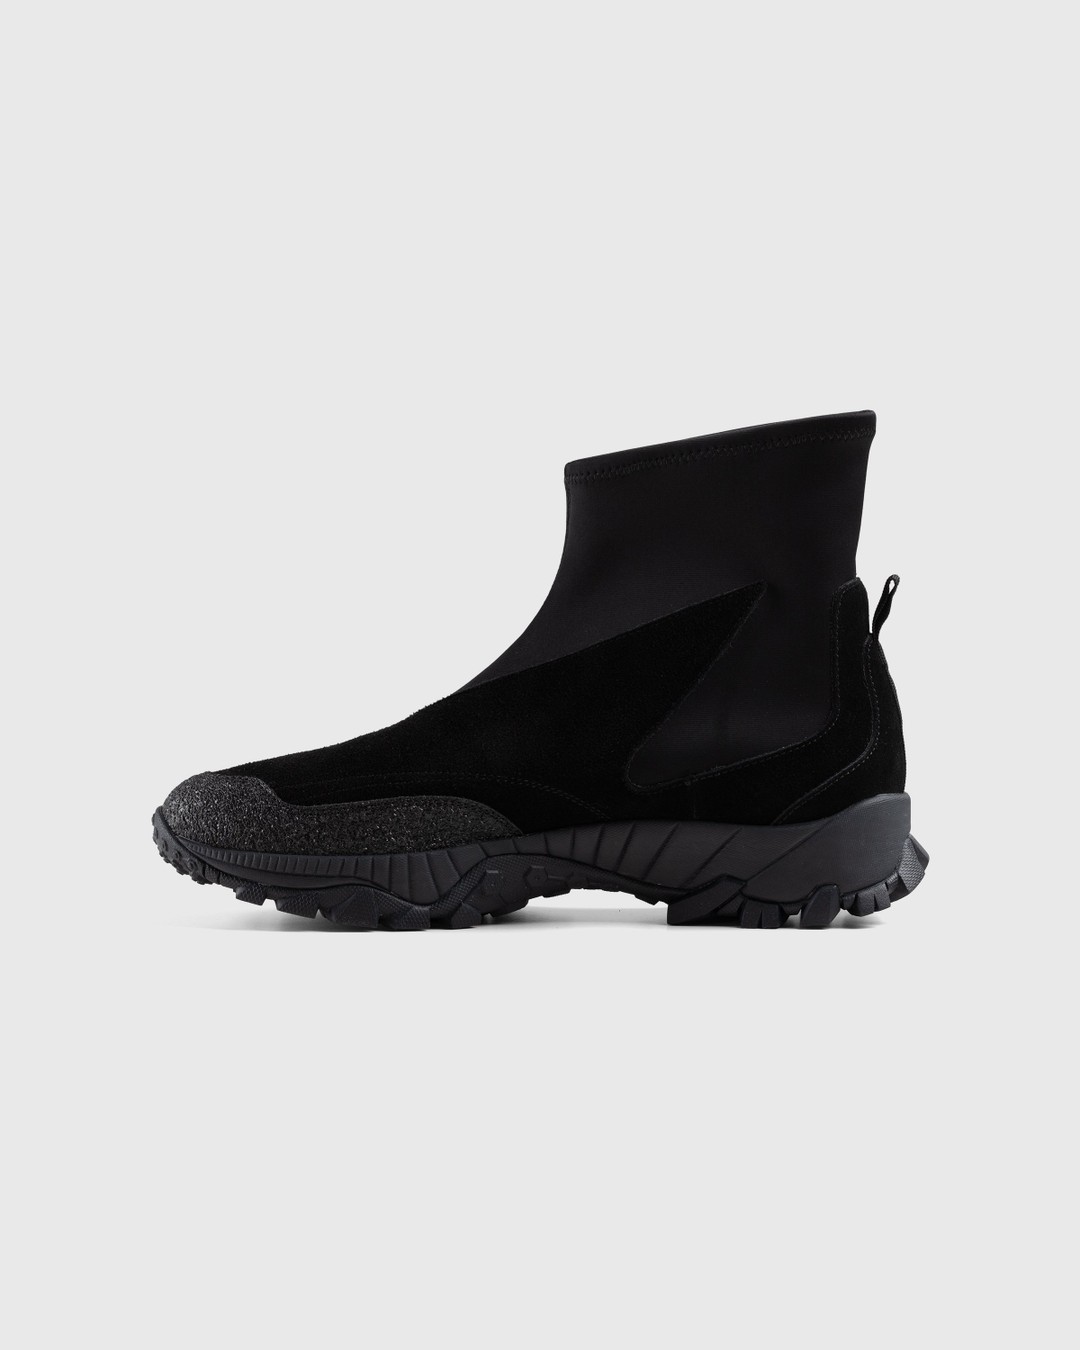 Trussardi – Neo Sock Sneaker Black - Low Top Sneakers - Black - Image 2